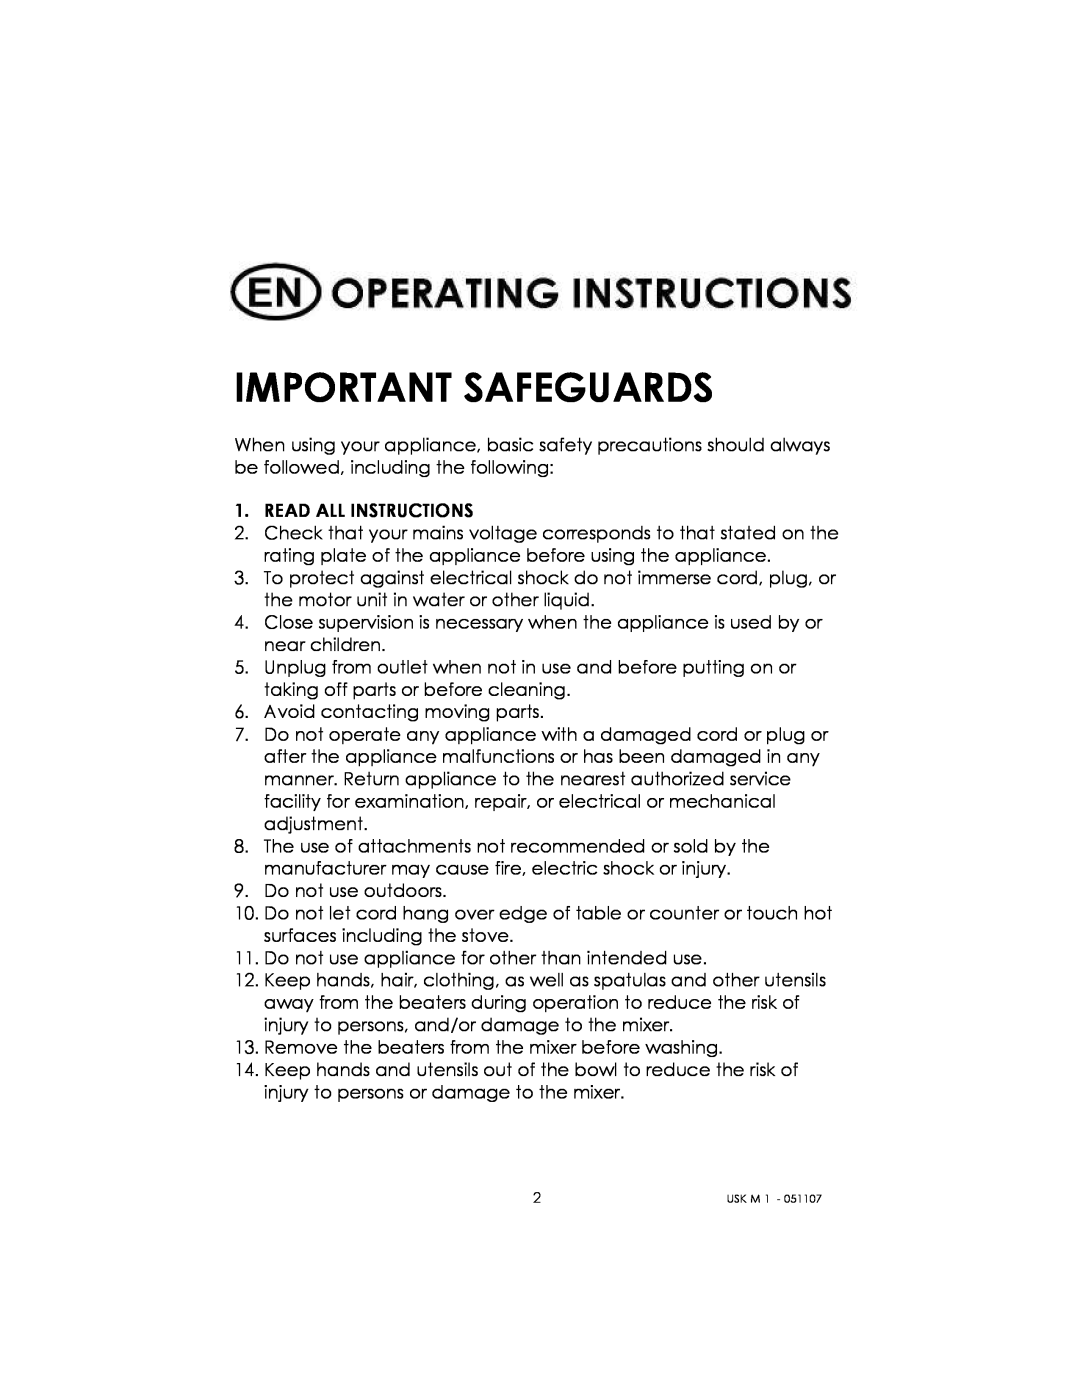 Kalorik USK M 1 manual Important Safeguards 